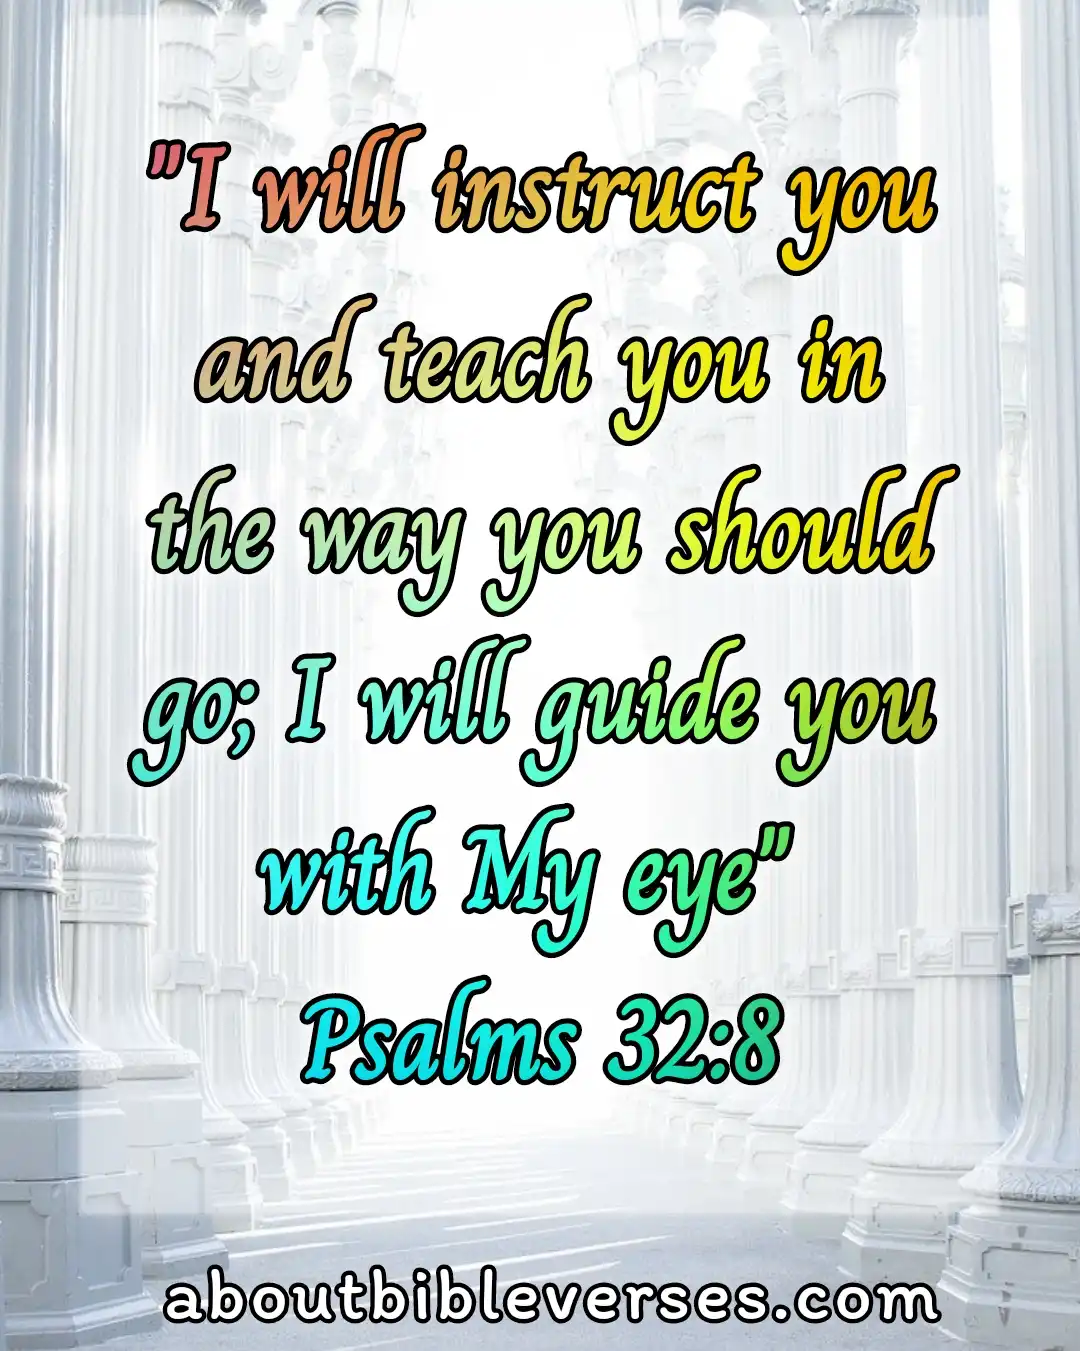 Bible verses about God's plans (Psalm 32:8)